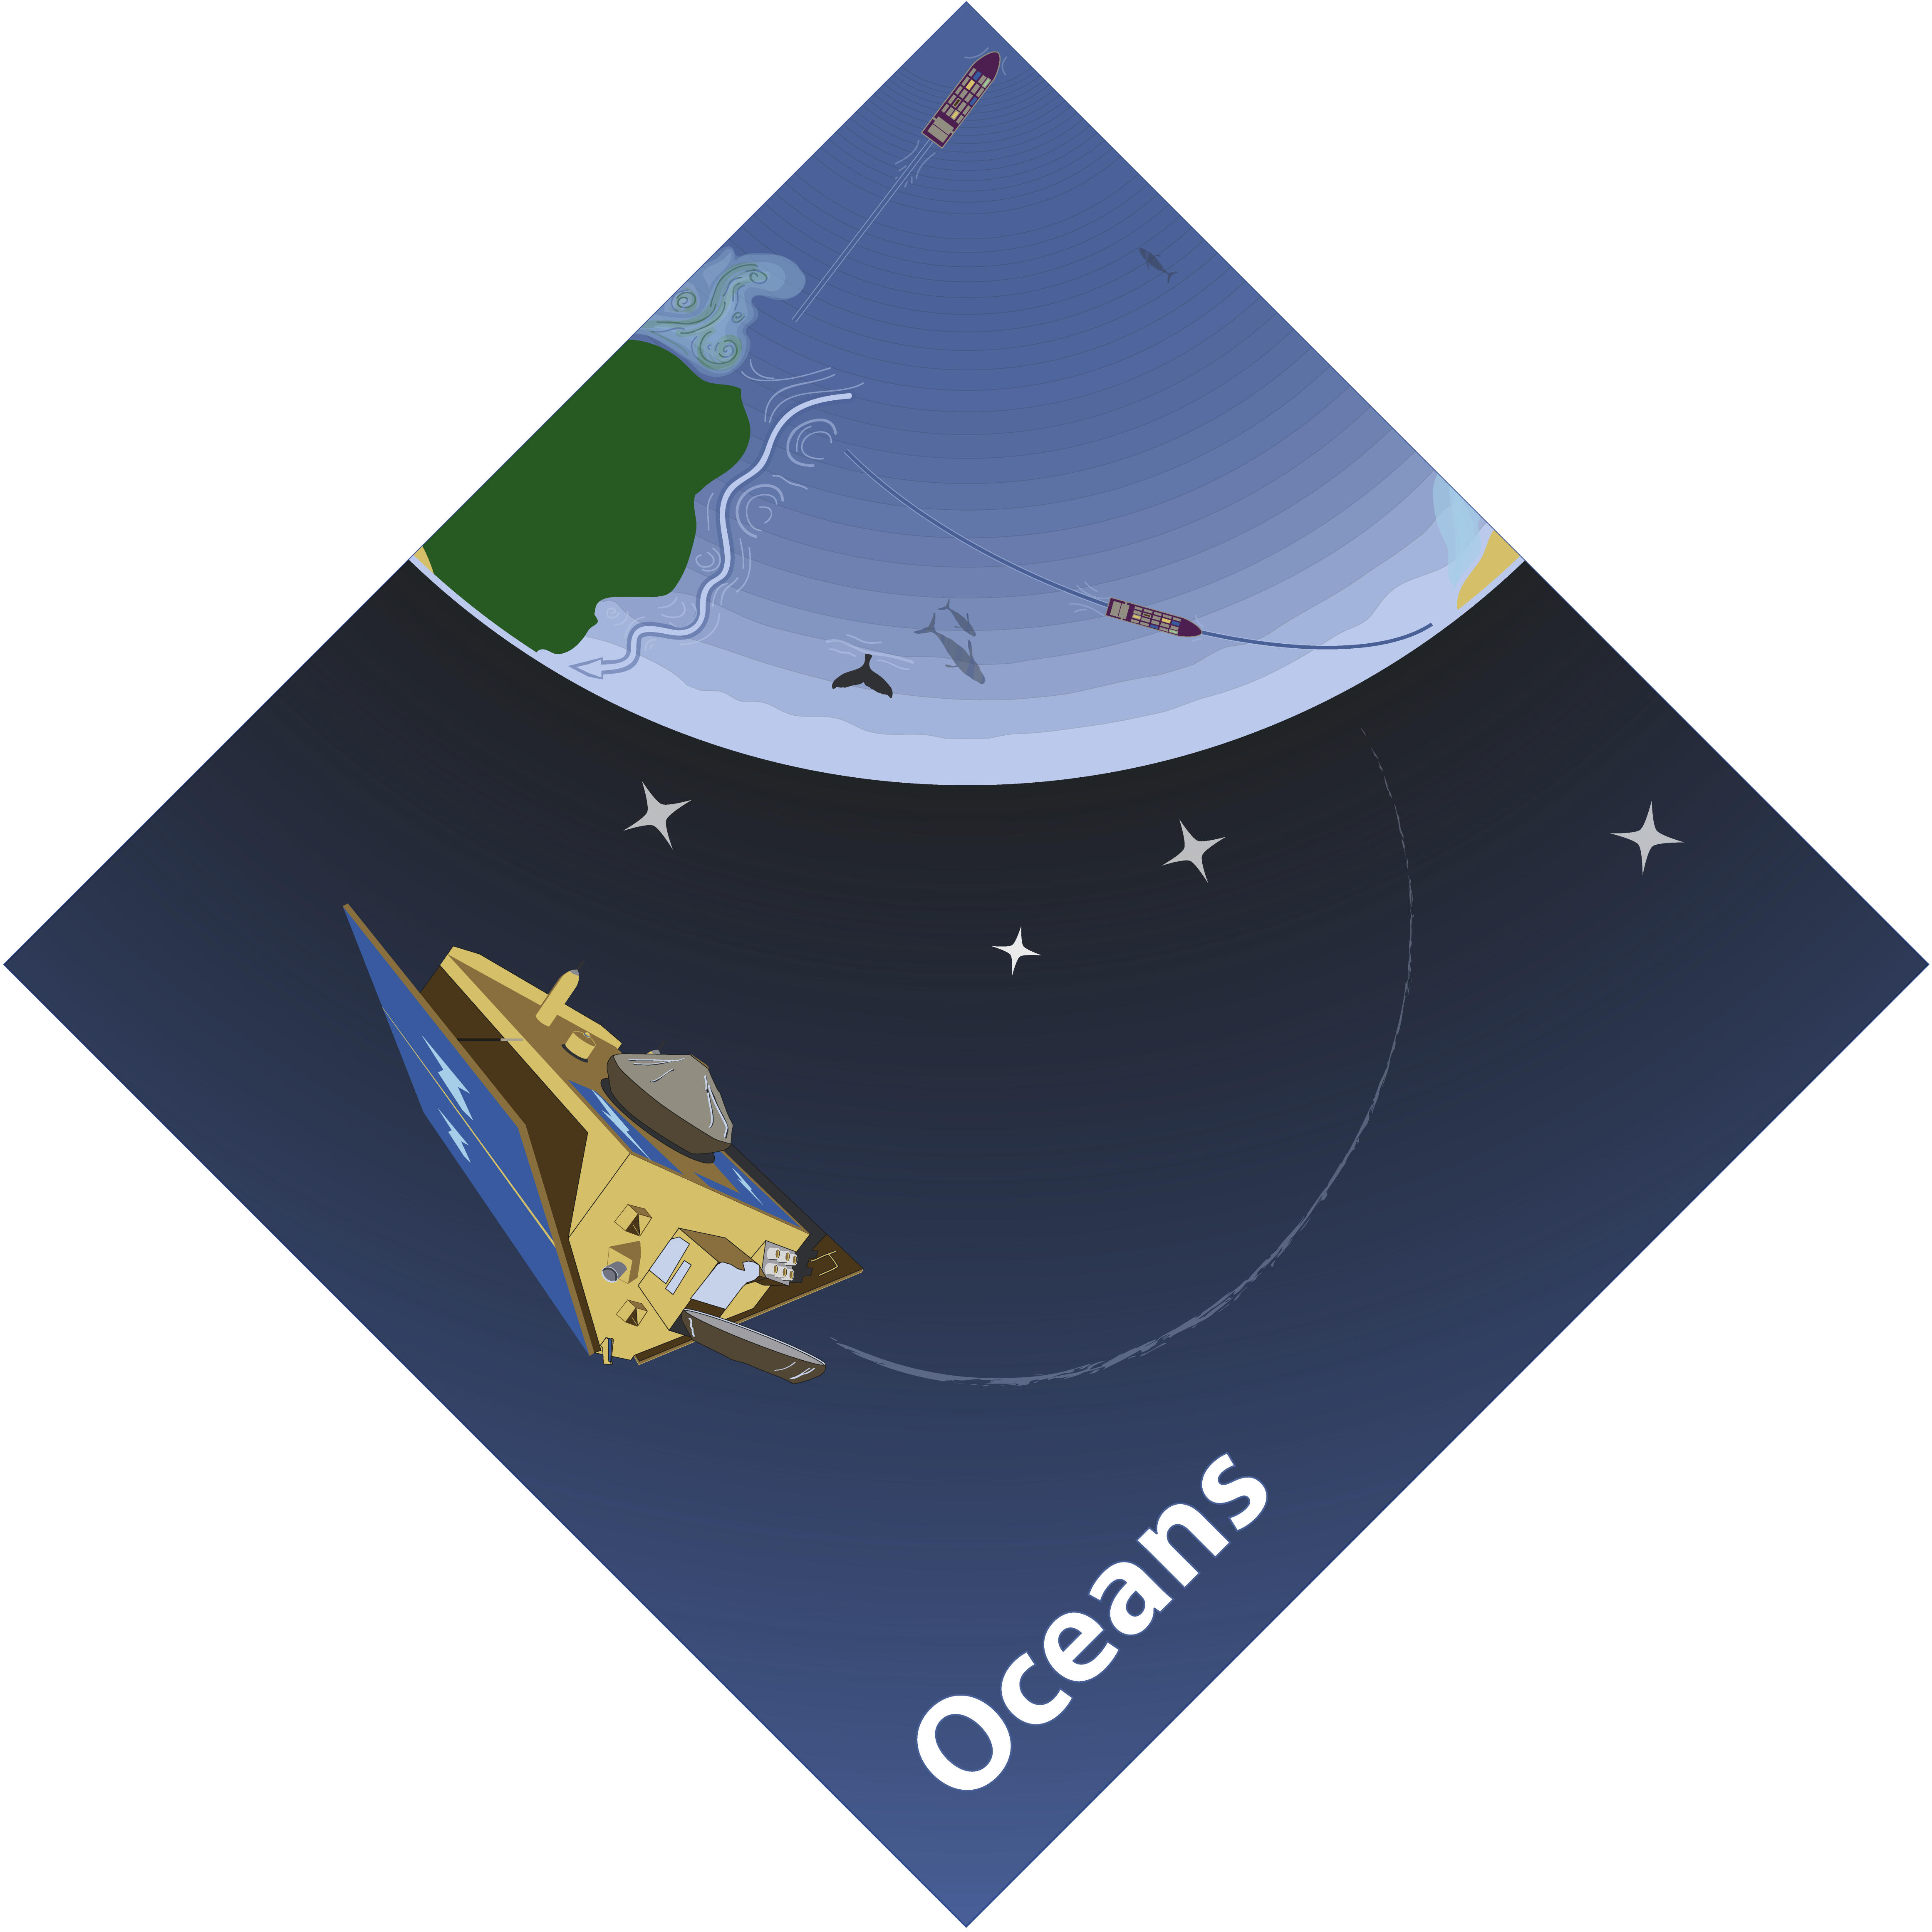 SatSchool Oceans module